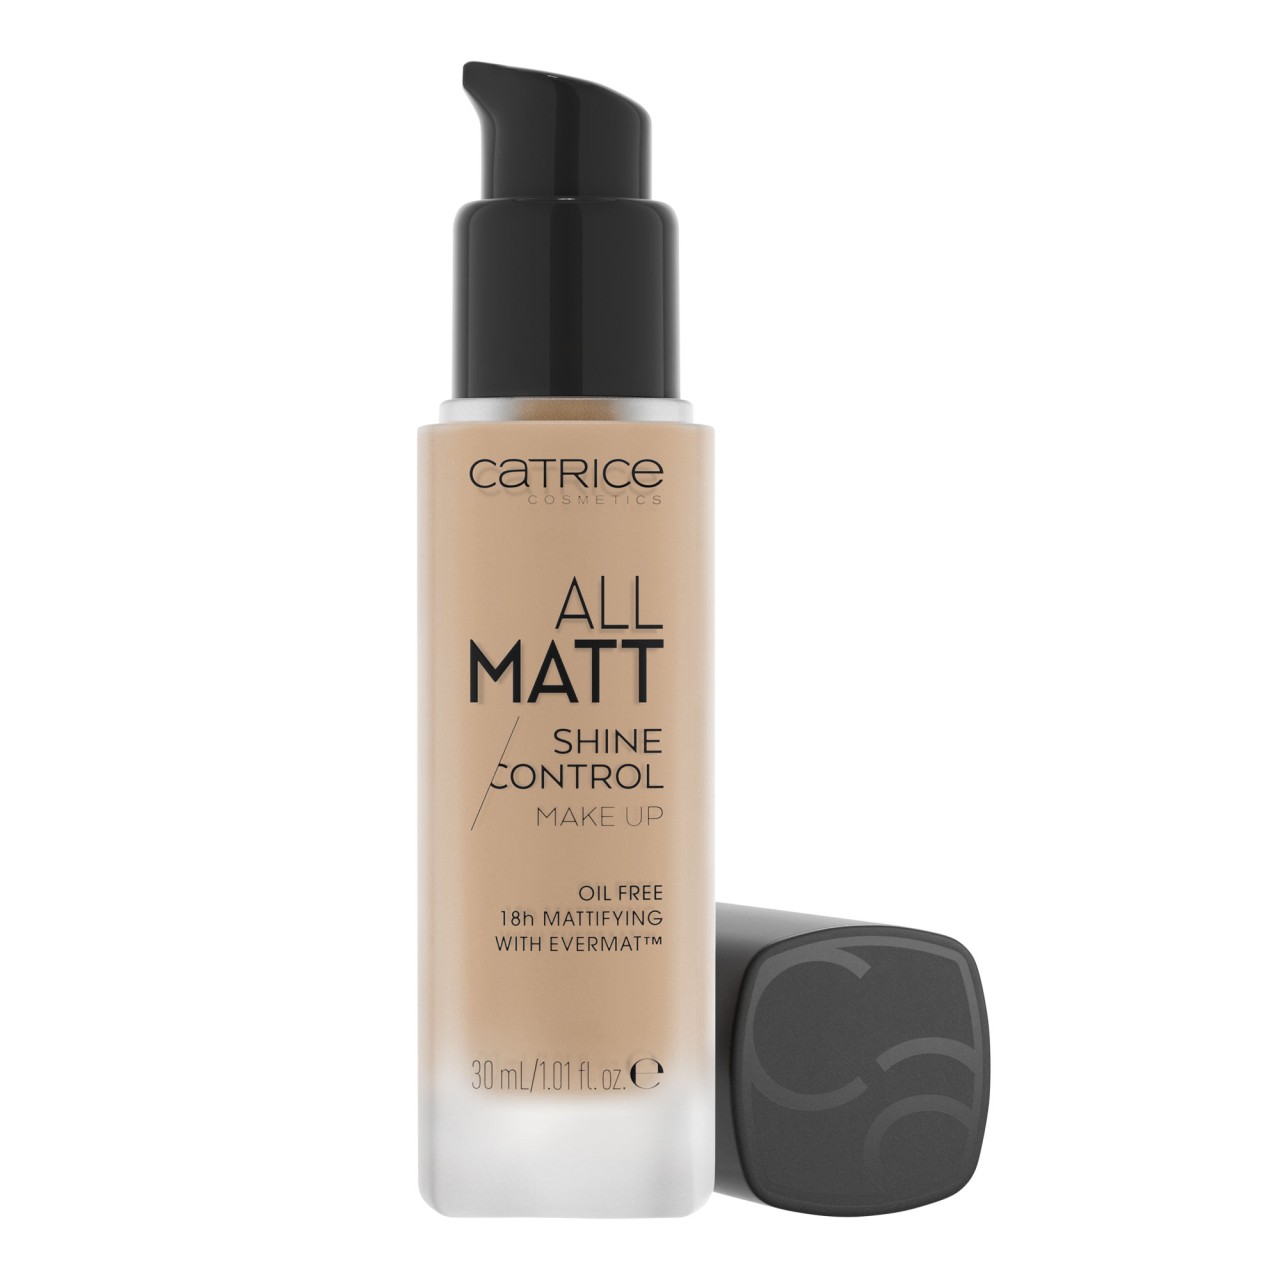 CATRICE - All Matte Shine Control Make Up -  Neutral Ambar Beige